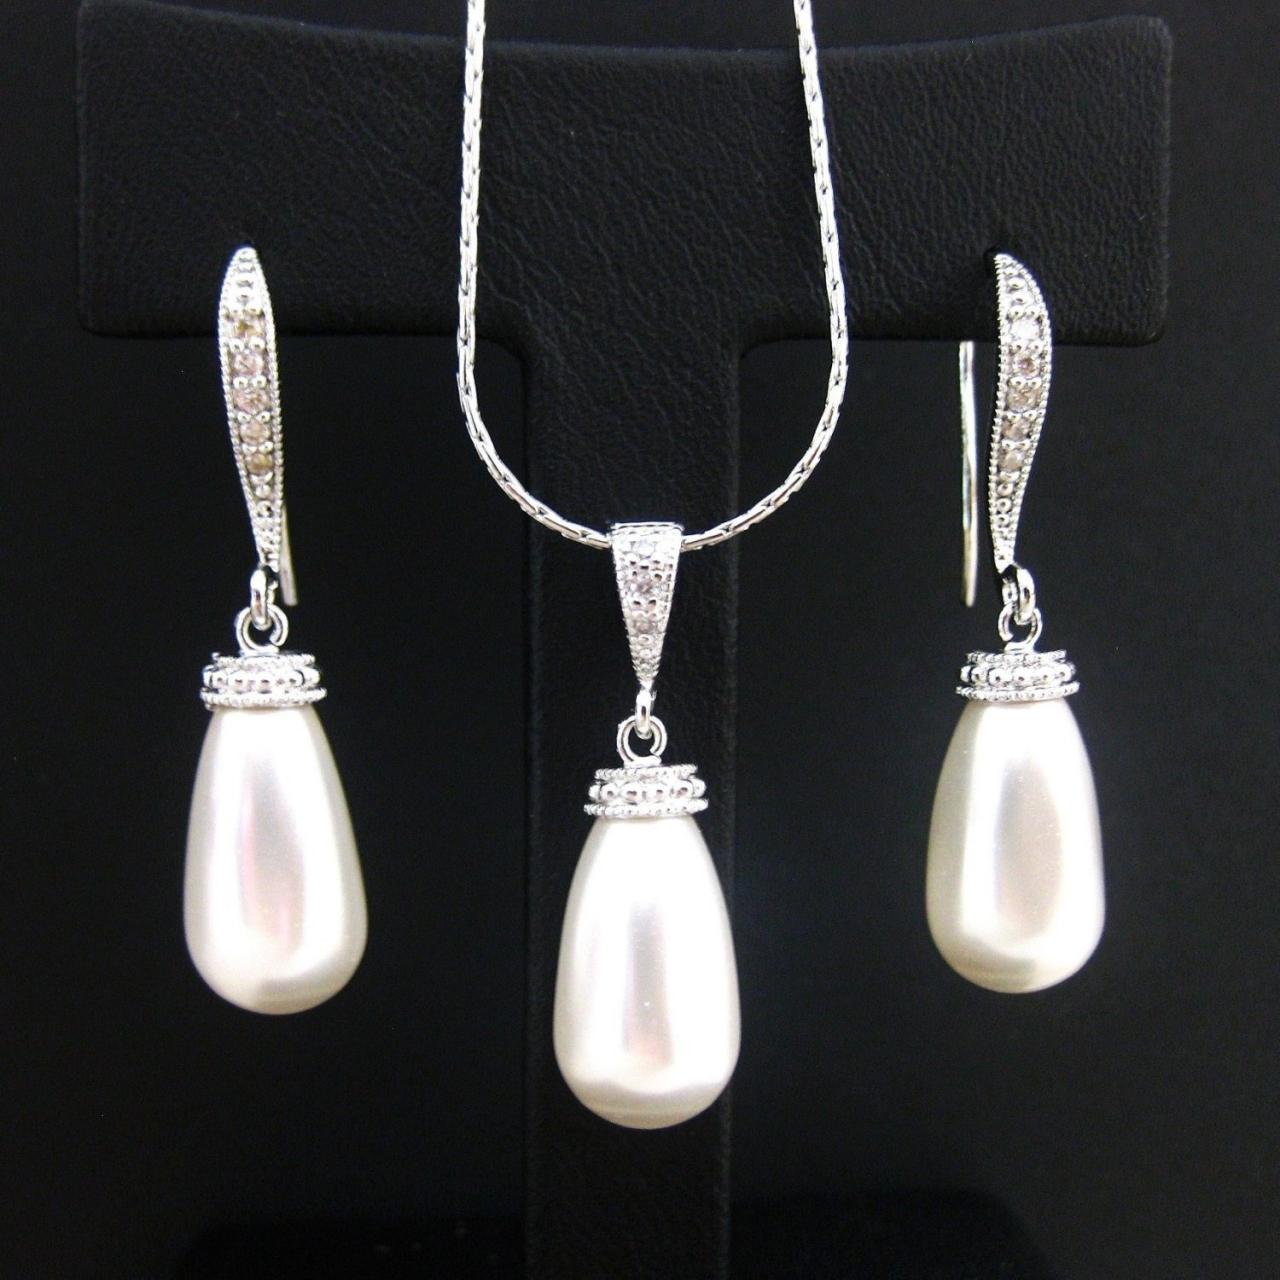 Bridal Pearl Earrings & Necklace Gift Set Teardrop Pearl Earrings Wedding Pearl Jewelry Bridesmaid Gift Dangle Drop Earrings (ne037)